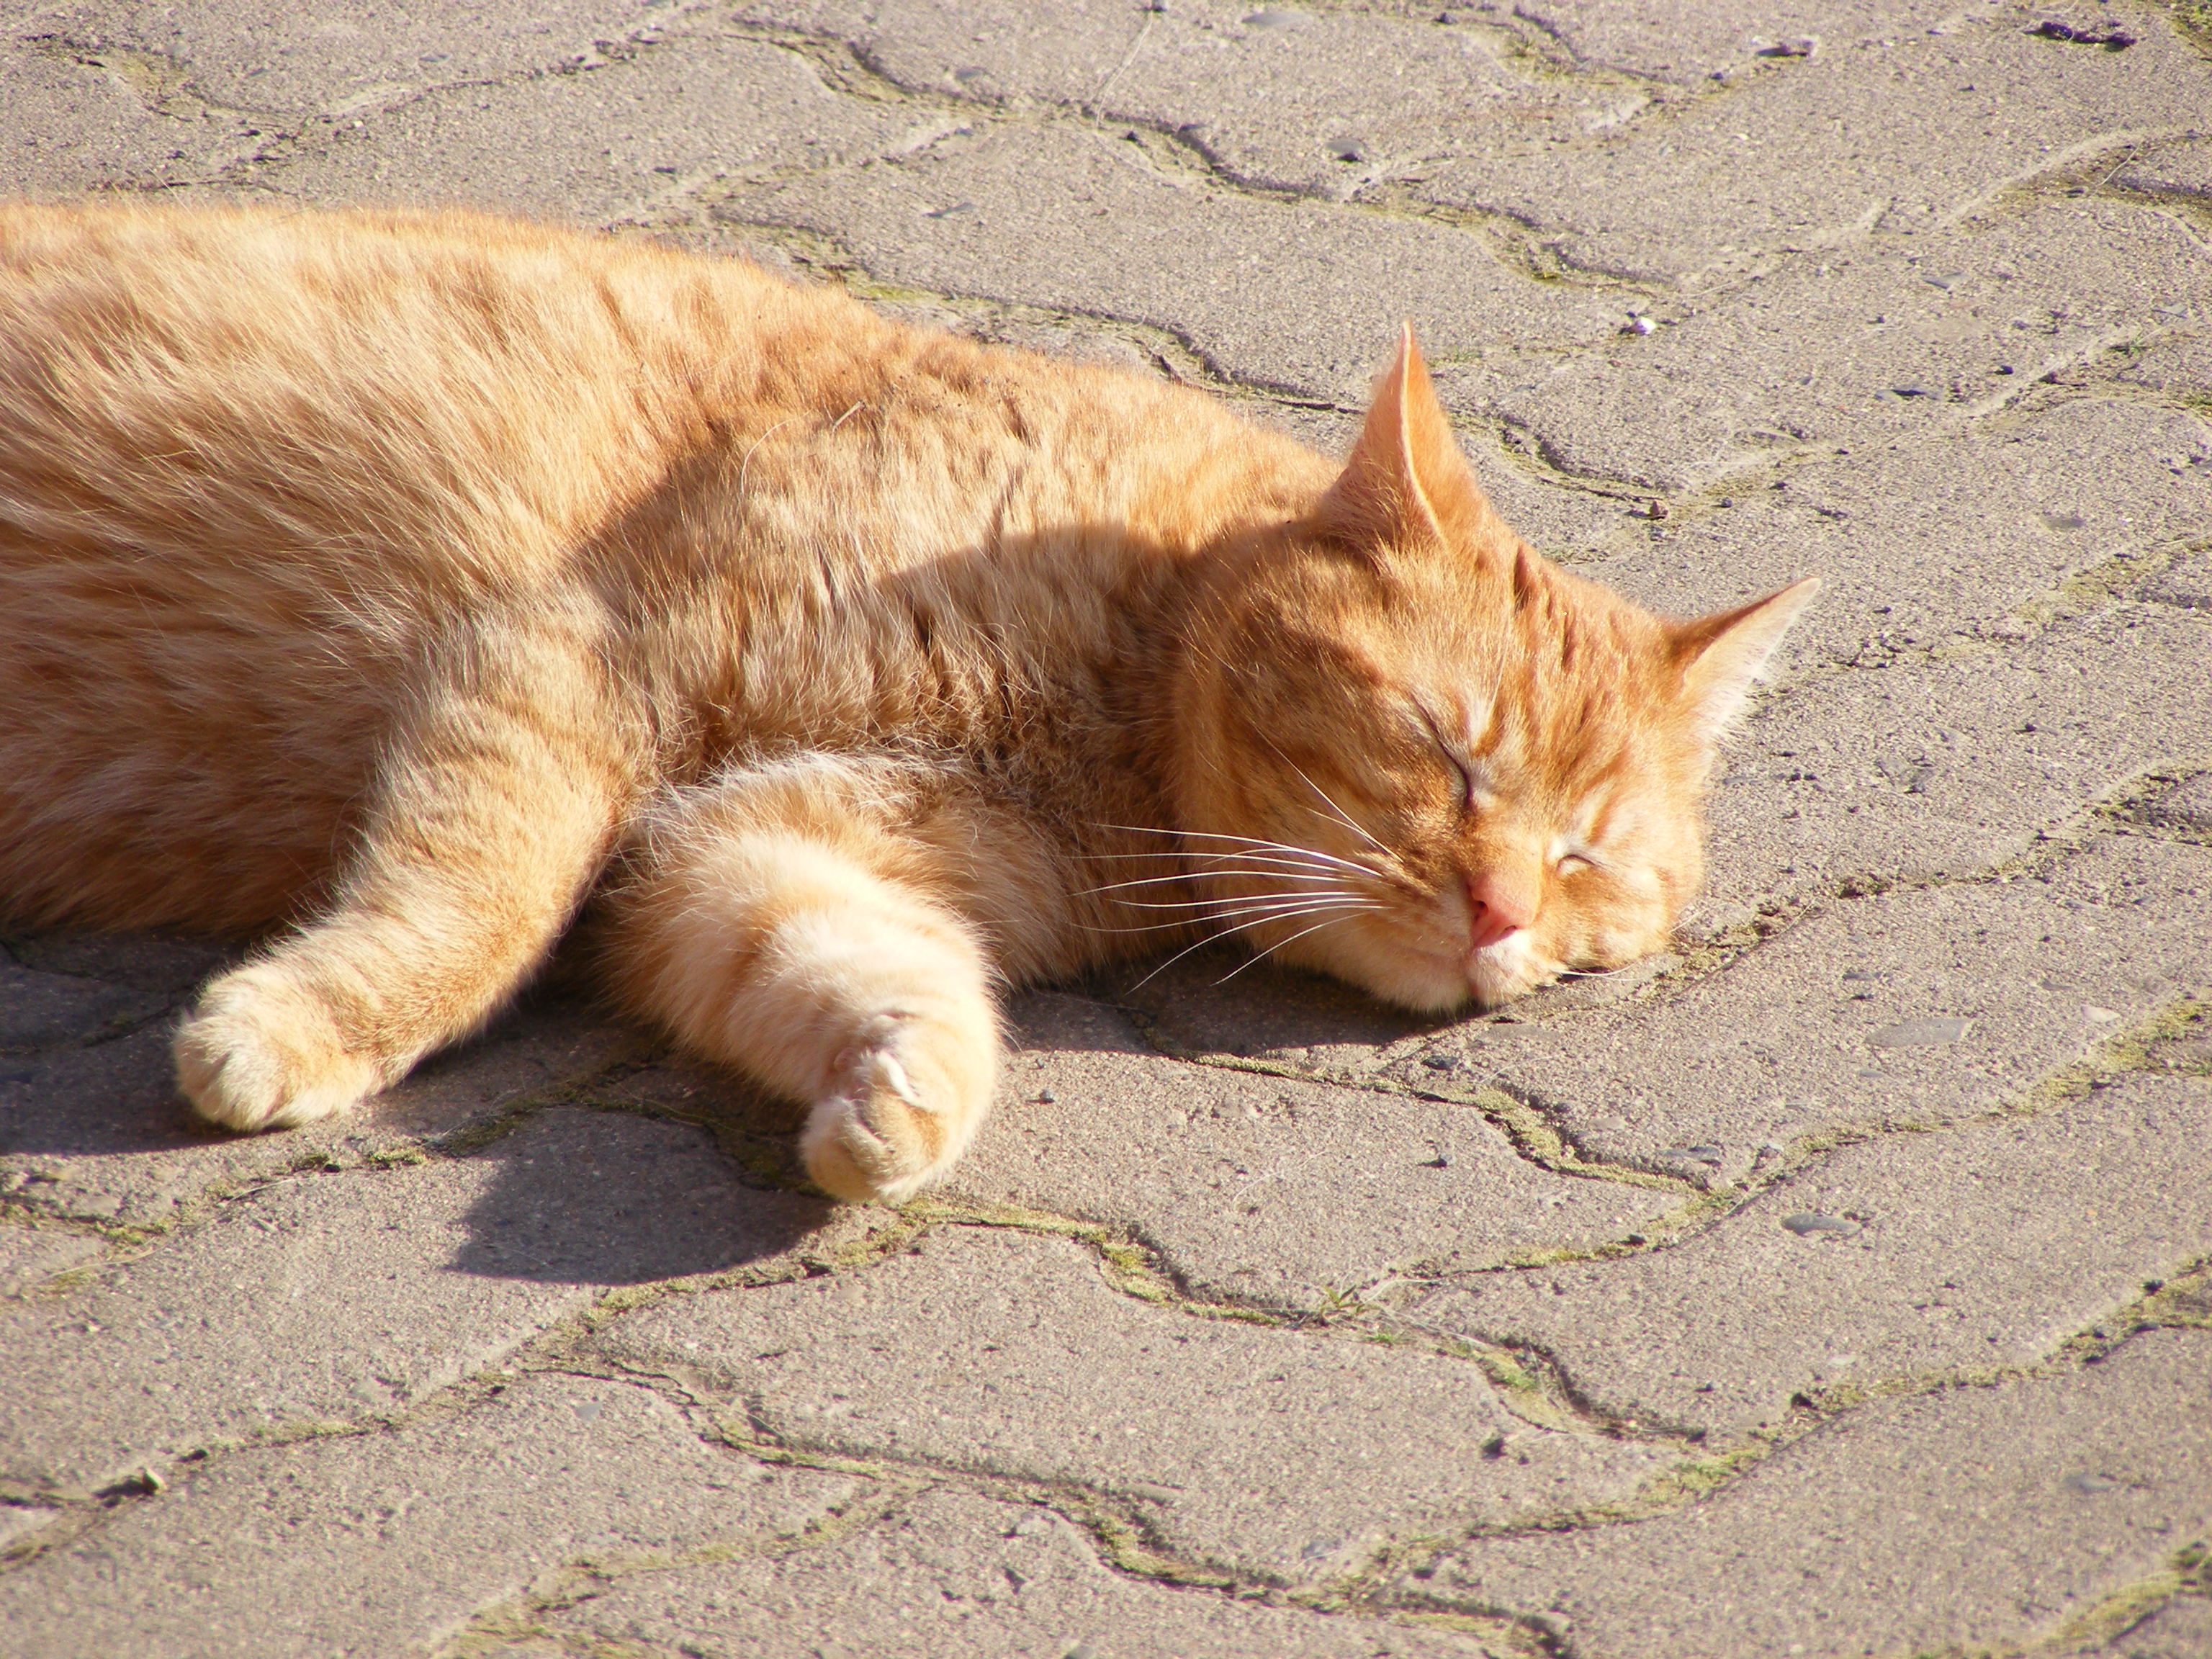 Sleeping cat in the sun - cc0.photo